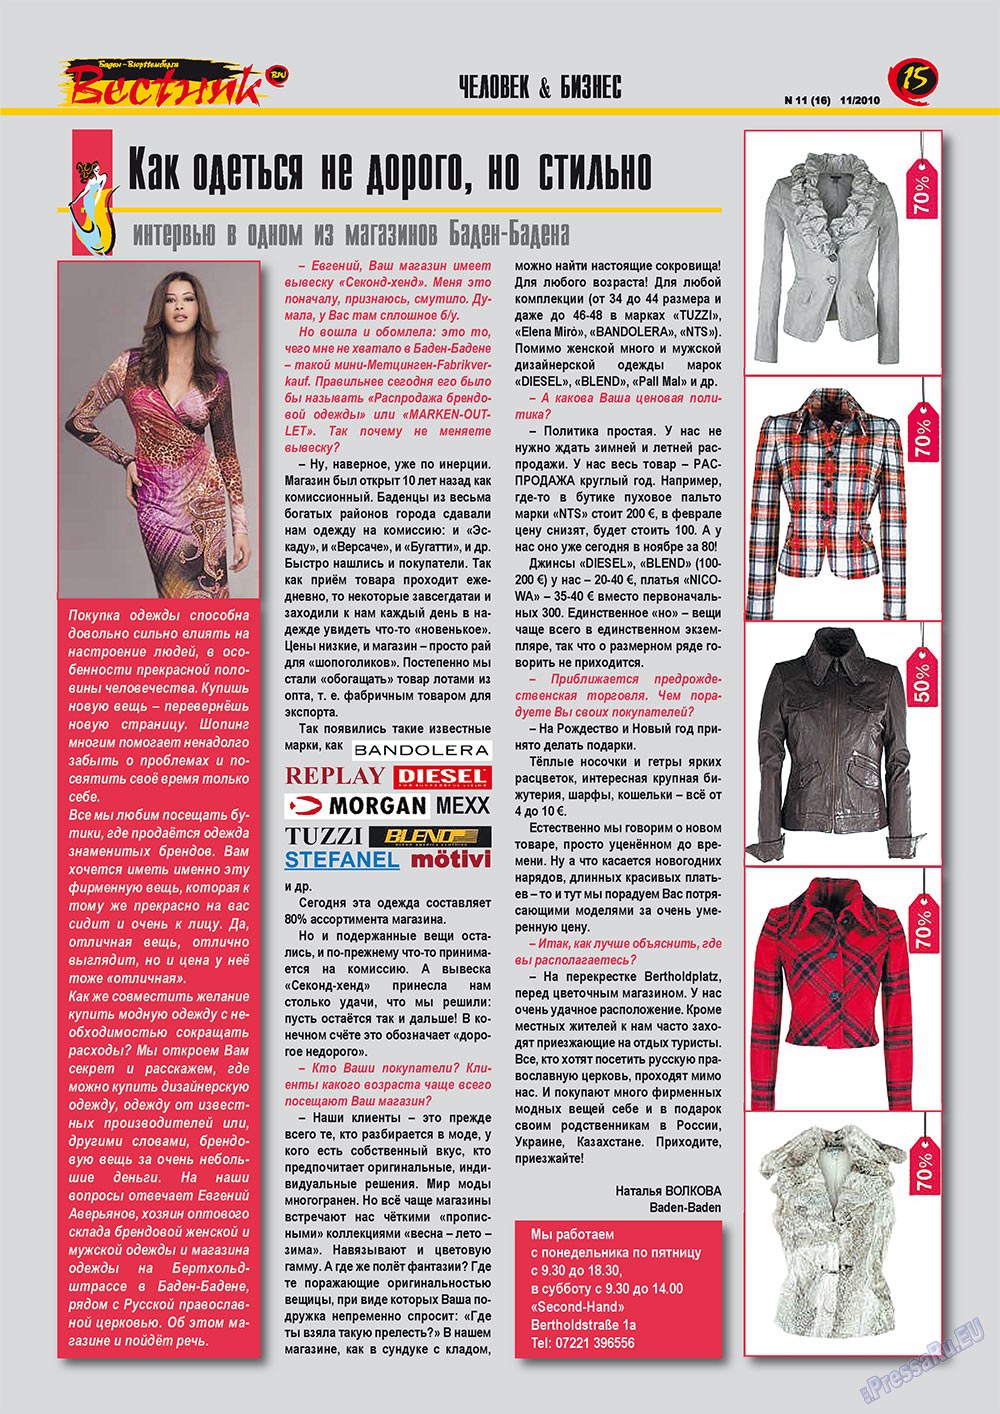 Вестник-info (журнал). 2010 год, номер 11, стр. 15